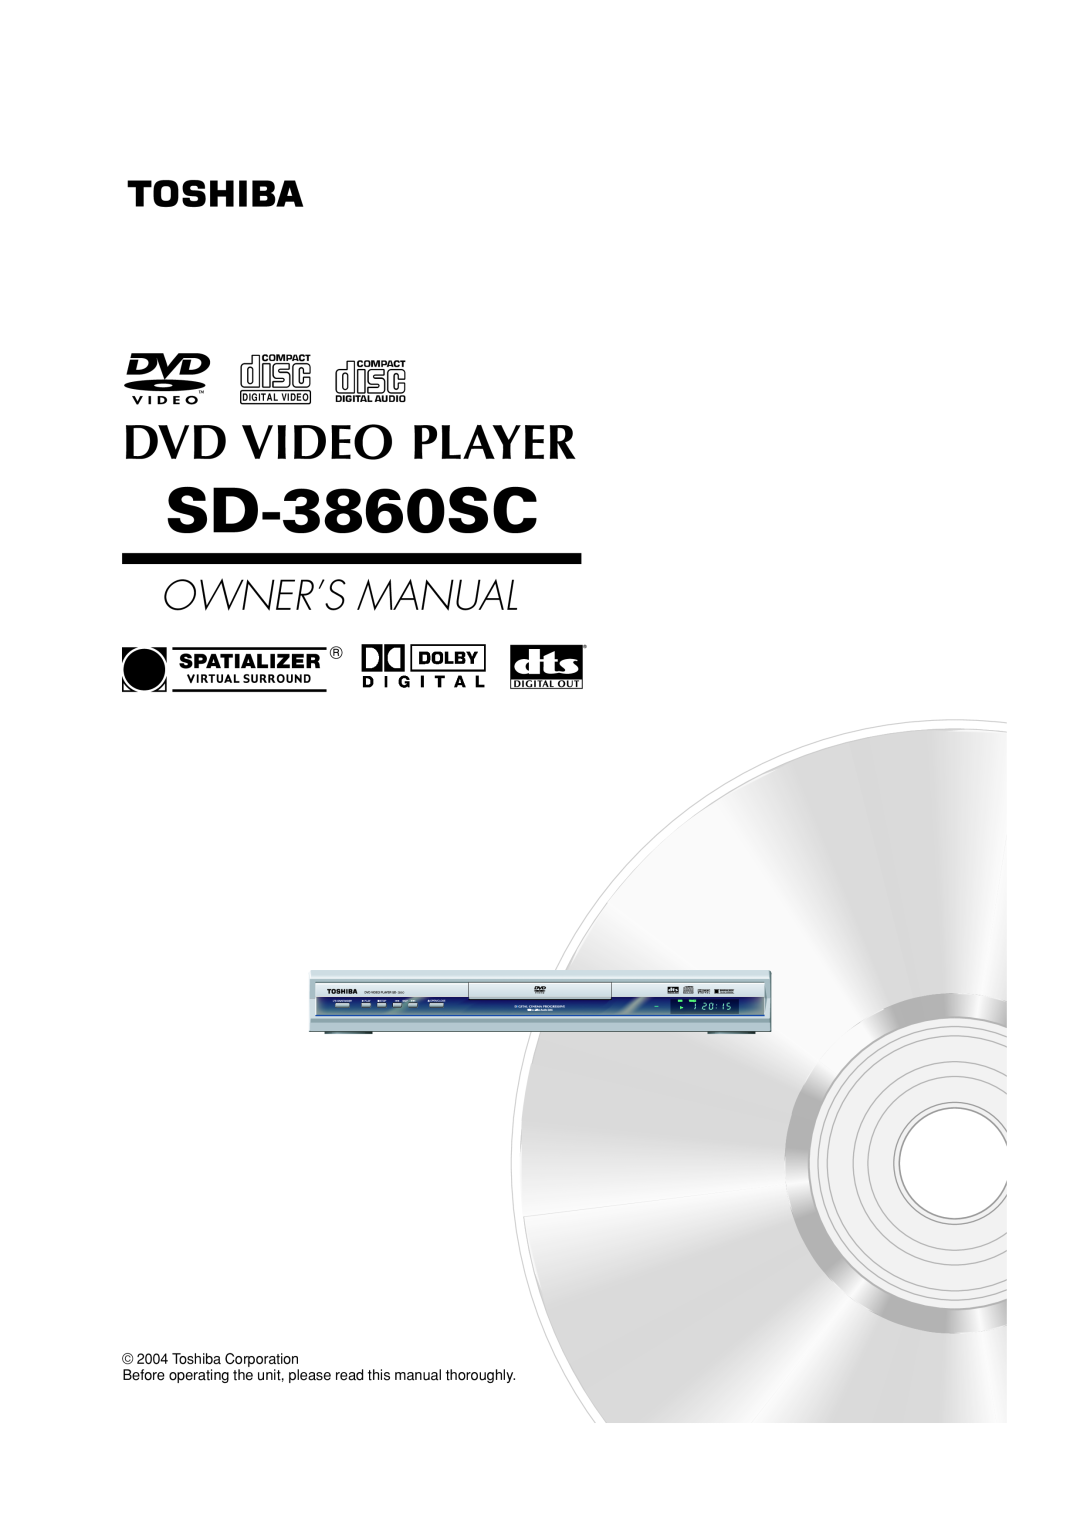 Toshiba SD-3860SC manual Dvd Video Player, Owner’S Manual, Digital Video 